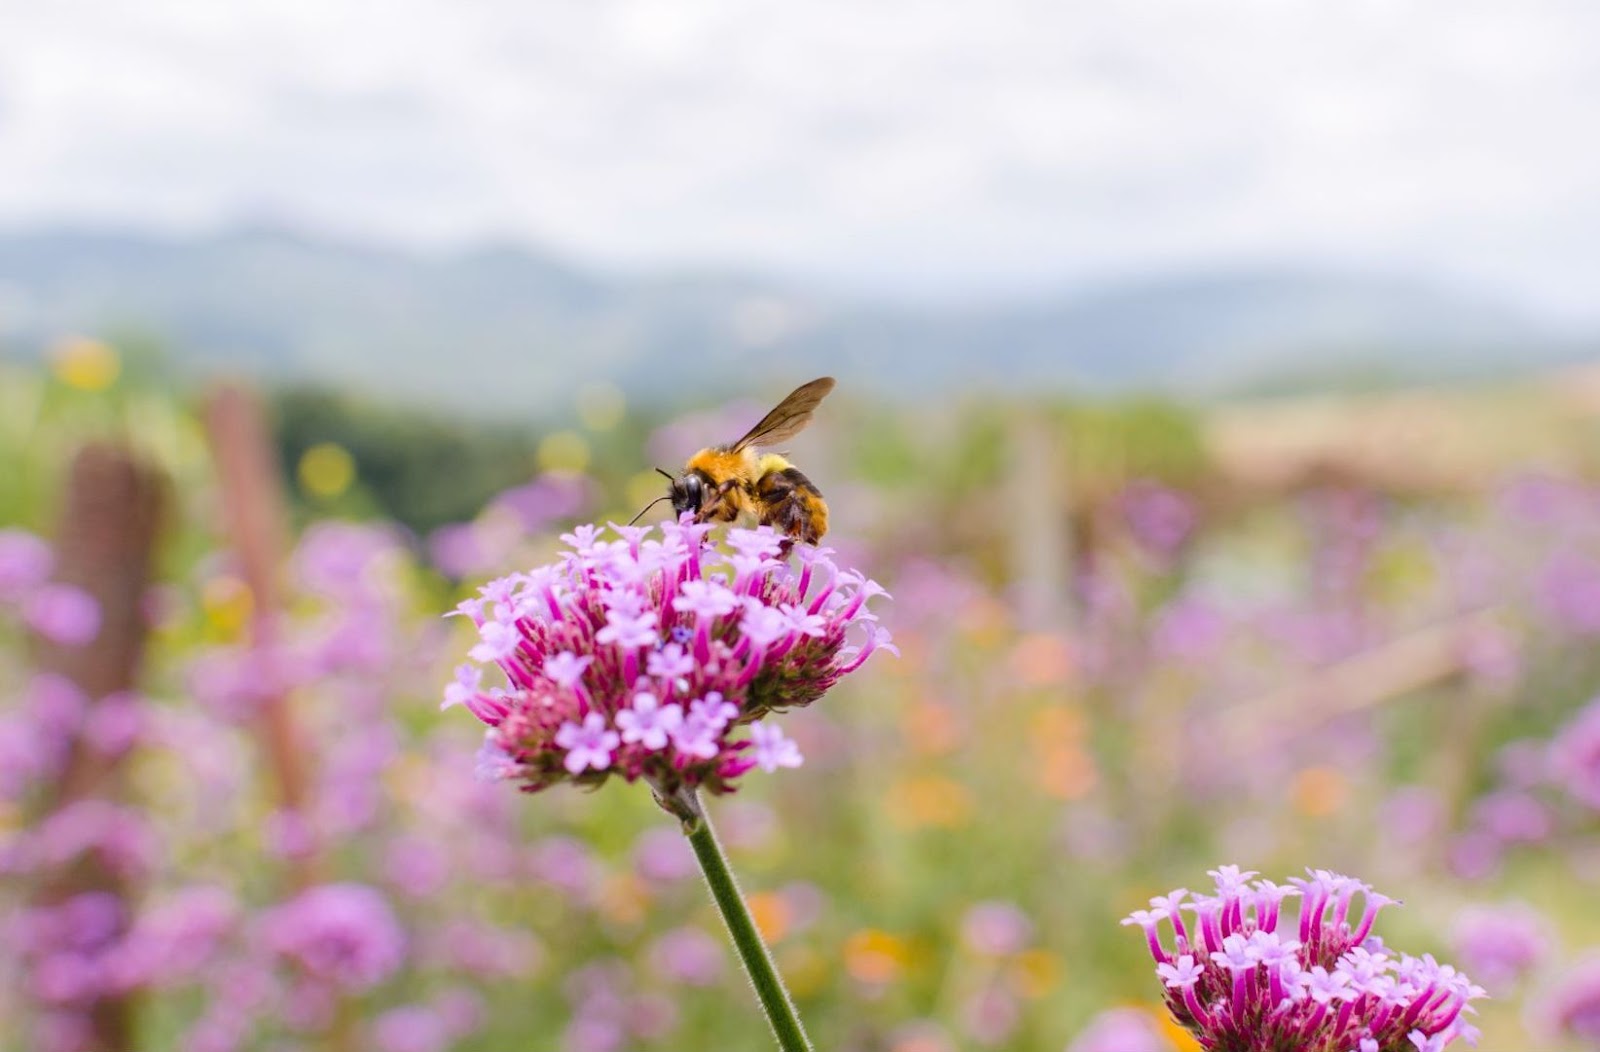 Urban farming provides habitats for bees.